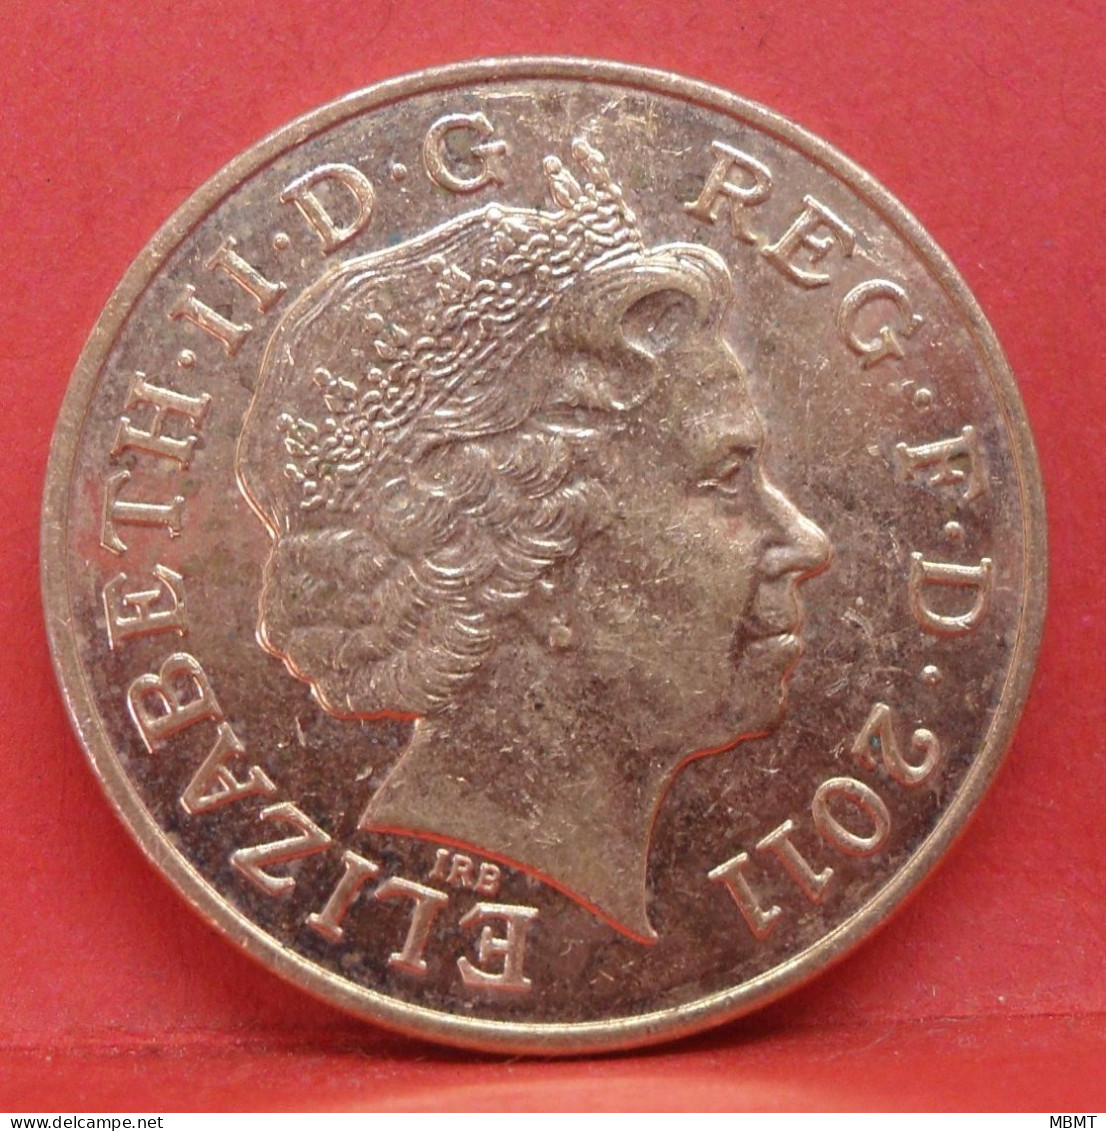 2 Pence 2011 - TTB - Pièce Monnaie Grande-Bretagne - Article N°2731 - 2 Pence & 2 New Pence